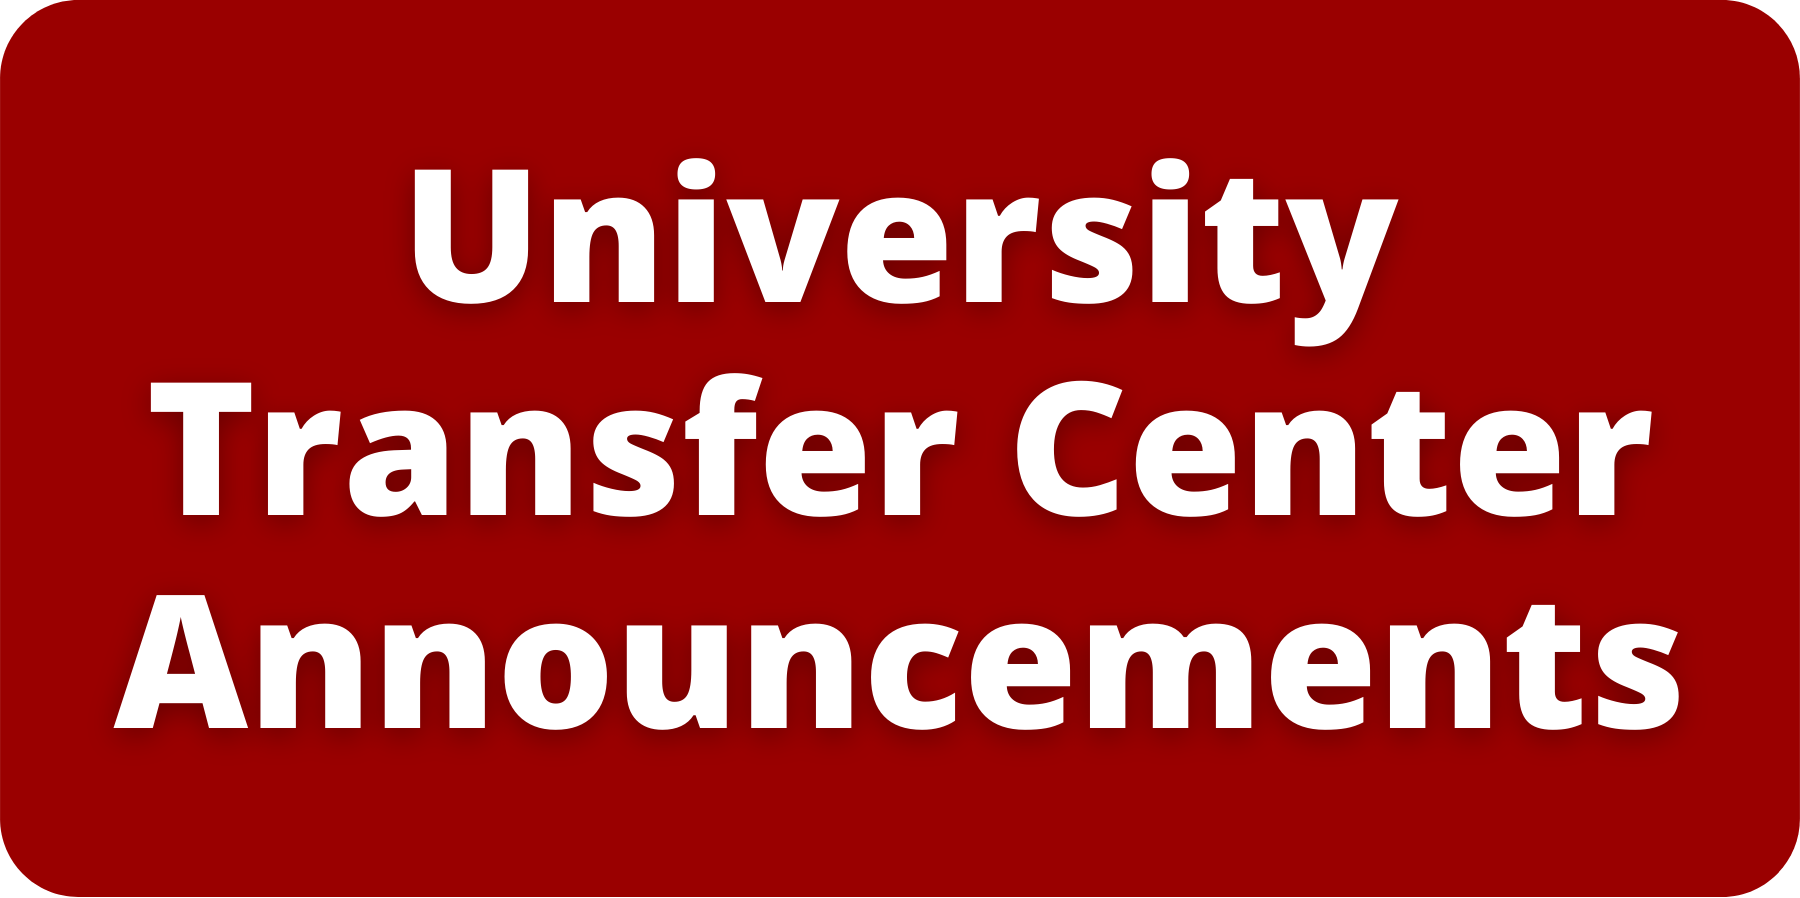 University Transfer Center Annoucements.png